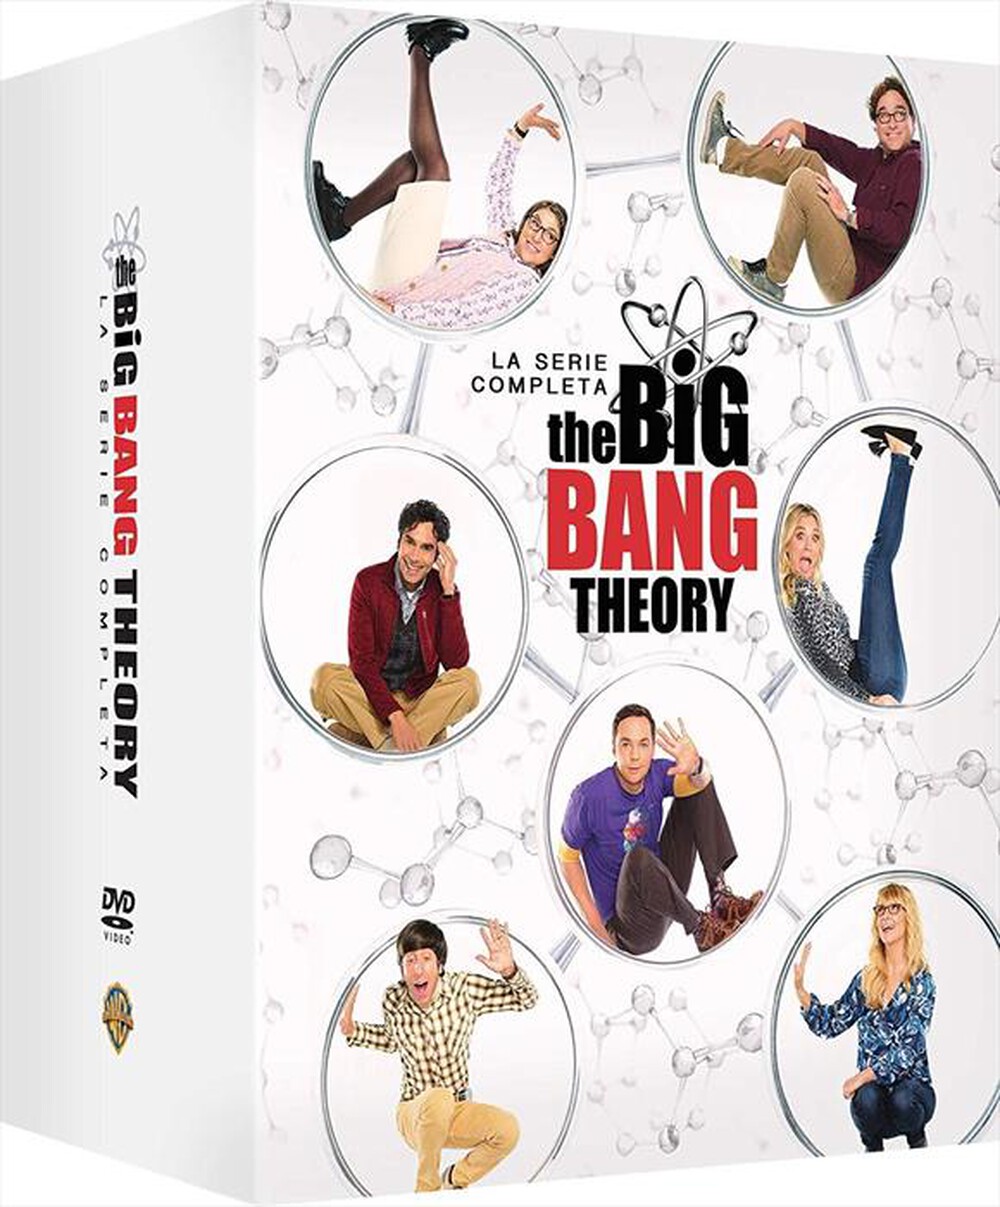 "WARNER HOME VIDEO - Big Bang Theory (The) - La Serie Completa (37 Dv"